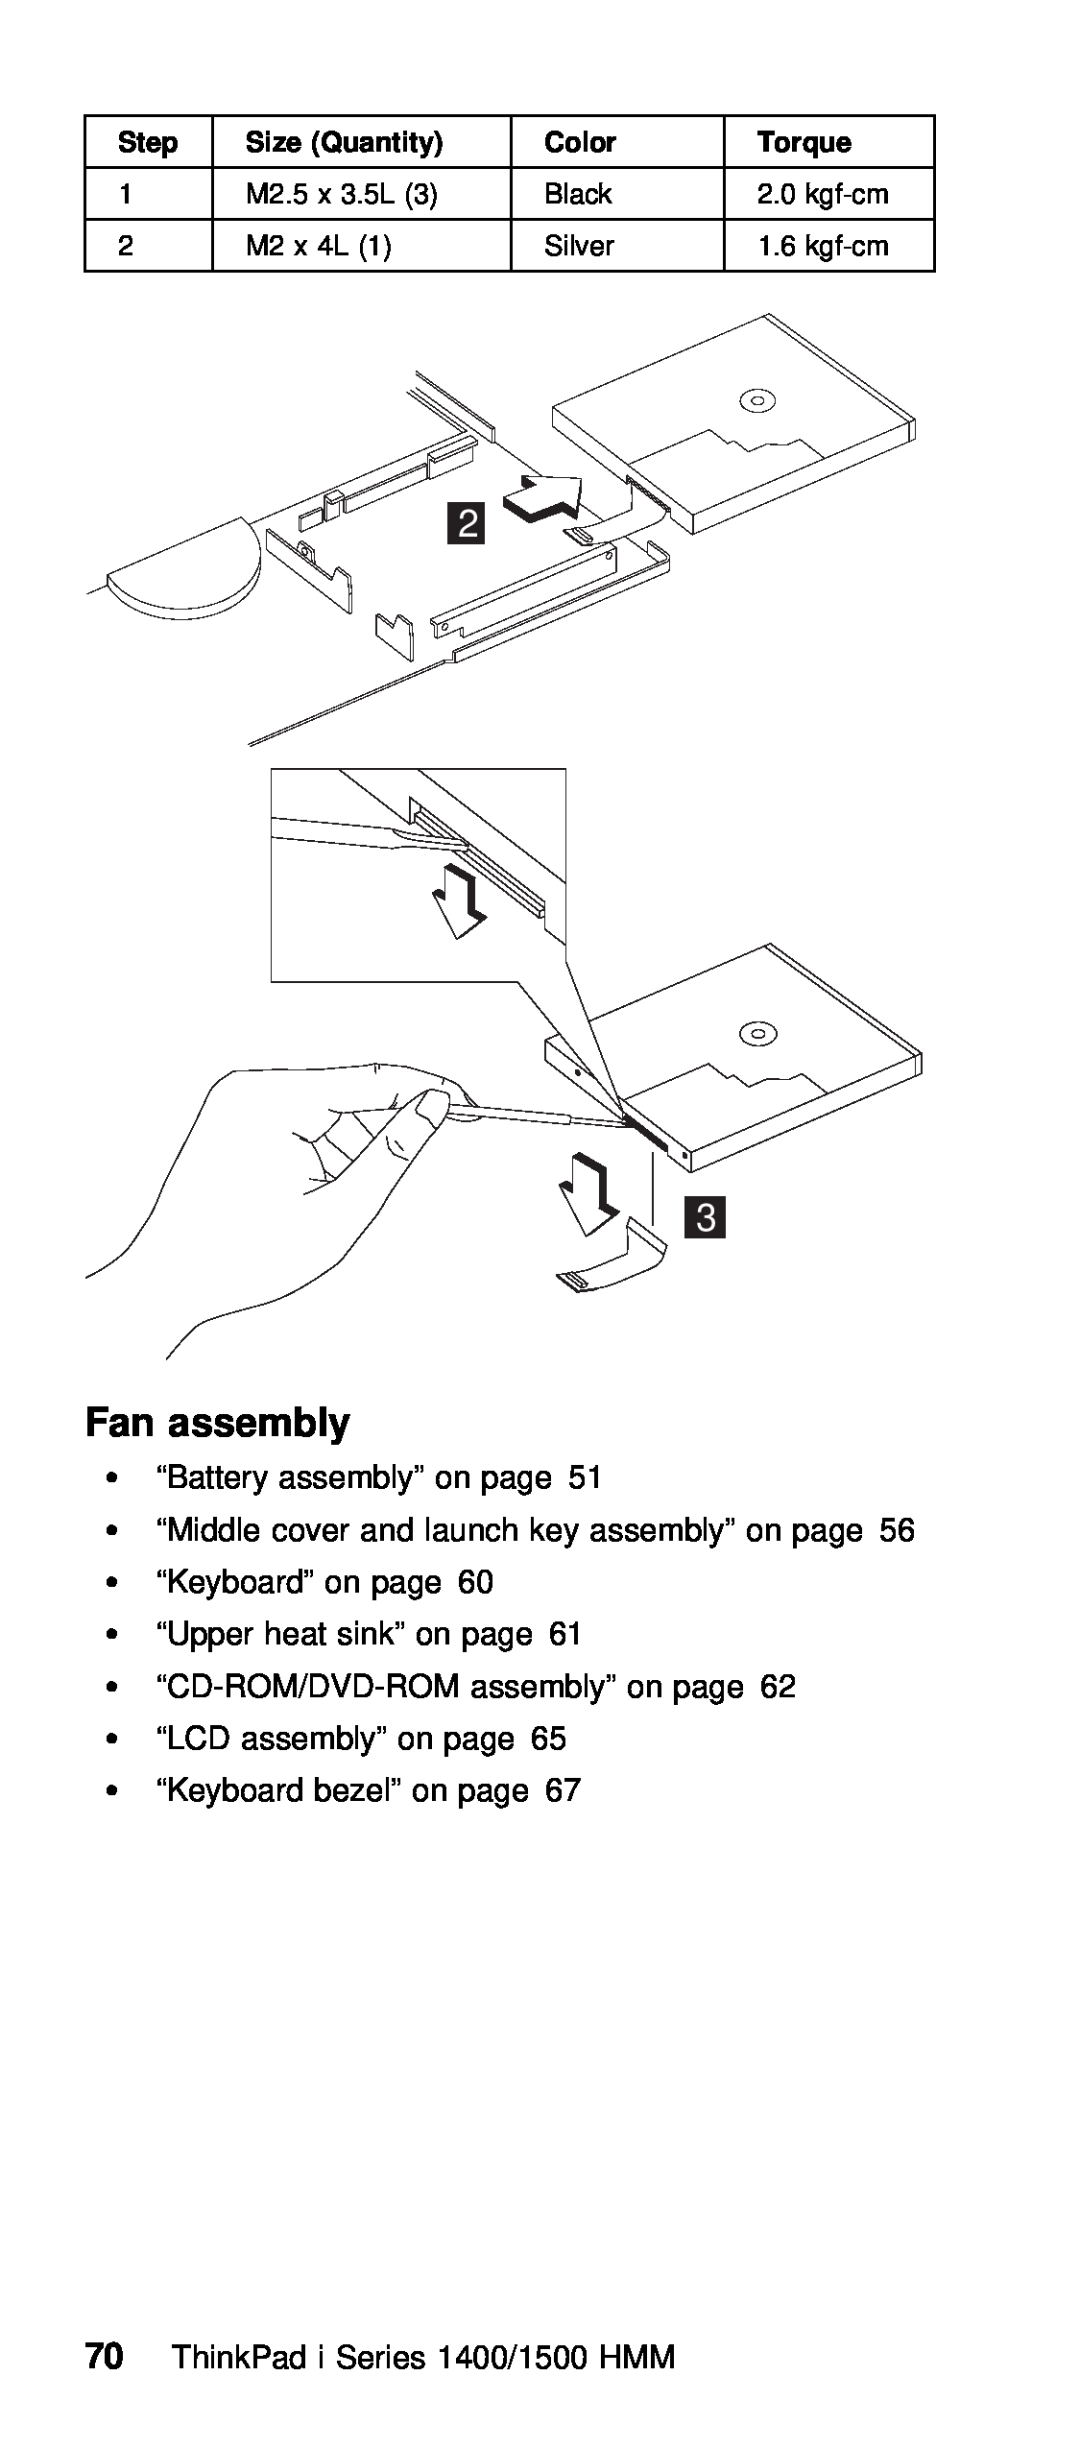 IBM Series 1500, Series 1400 manual Fan assembly 